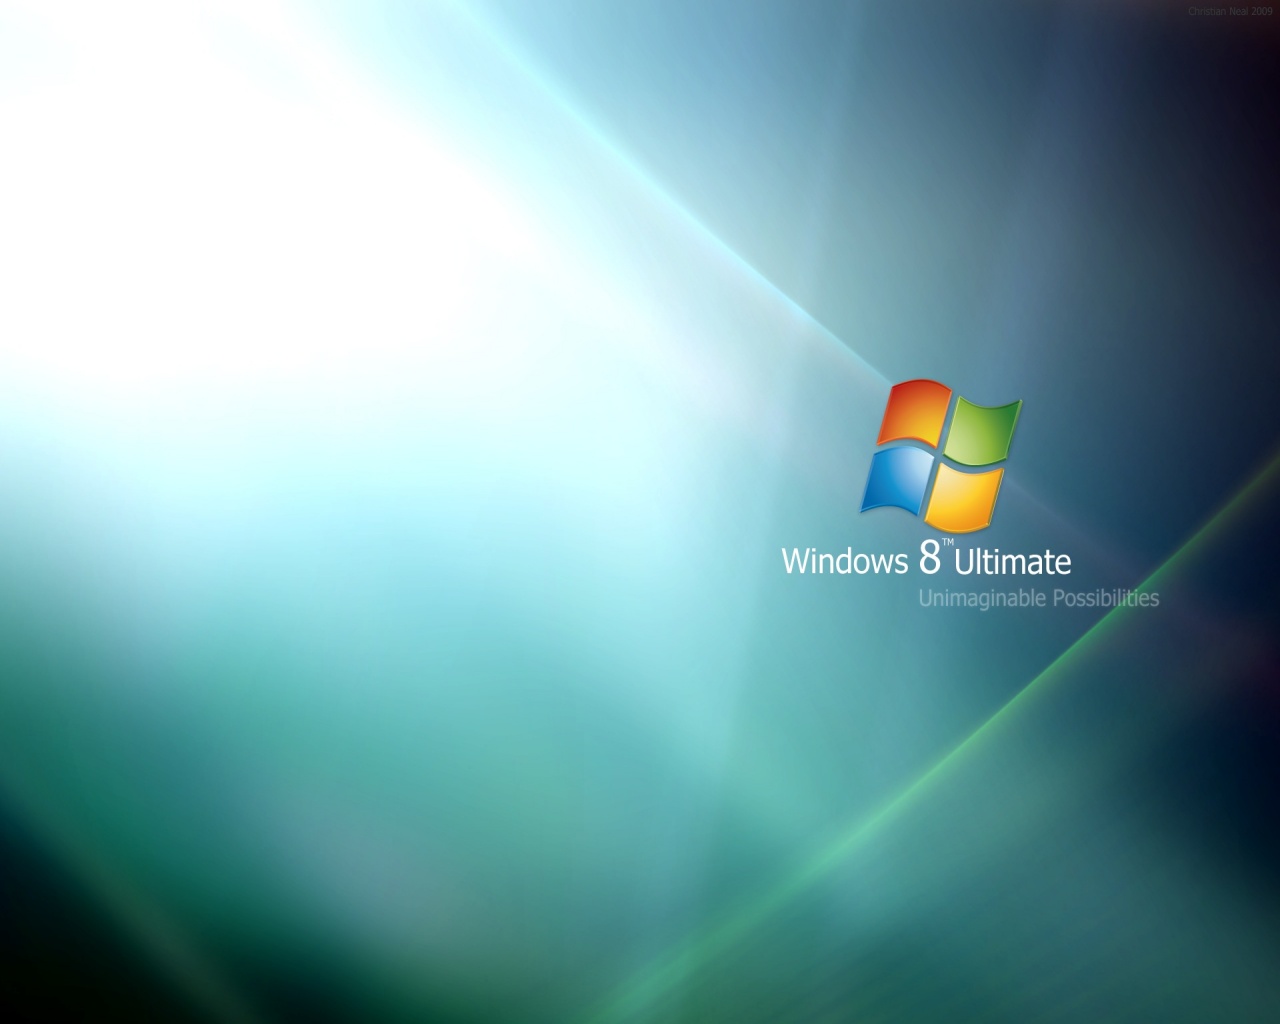 1280x1024 Windows 8 Ultimate desktop PC and Mac wallpaper